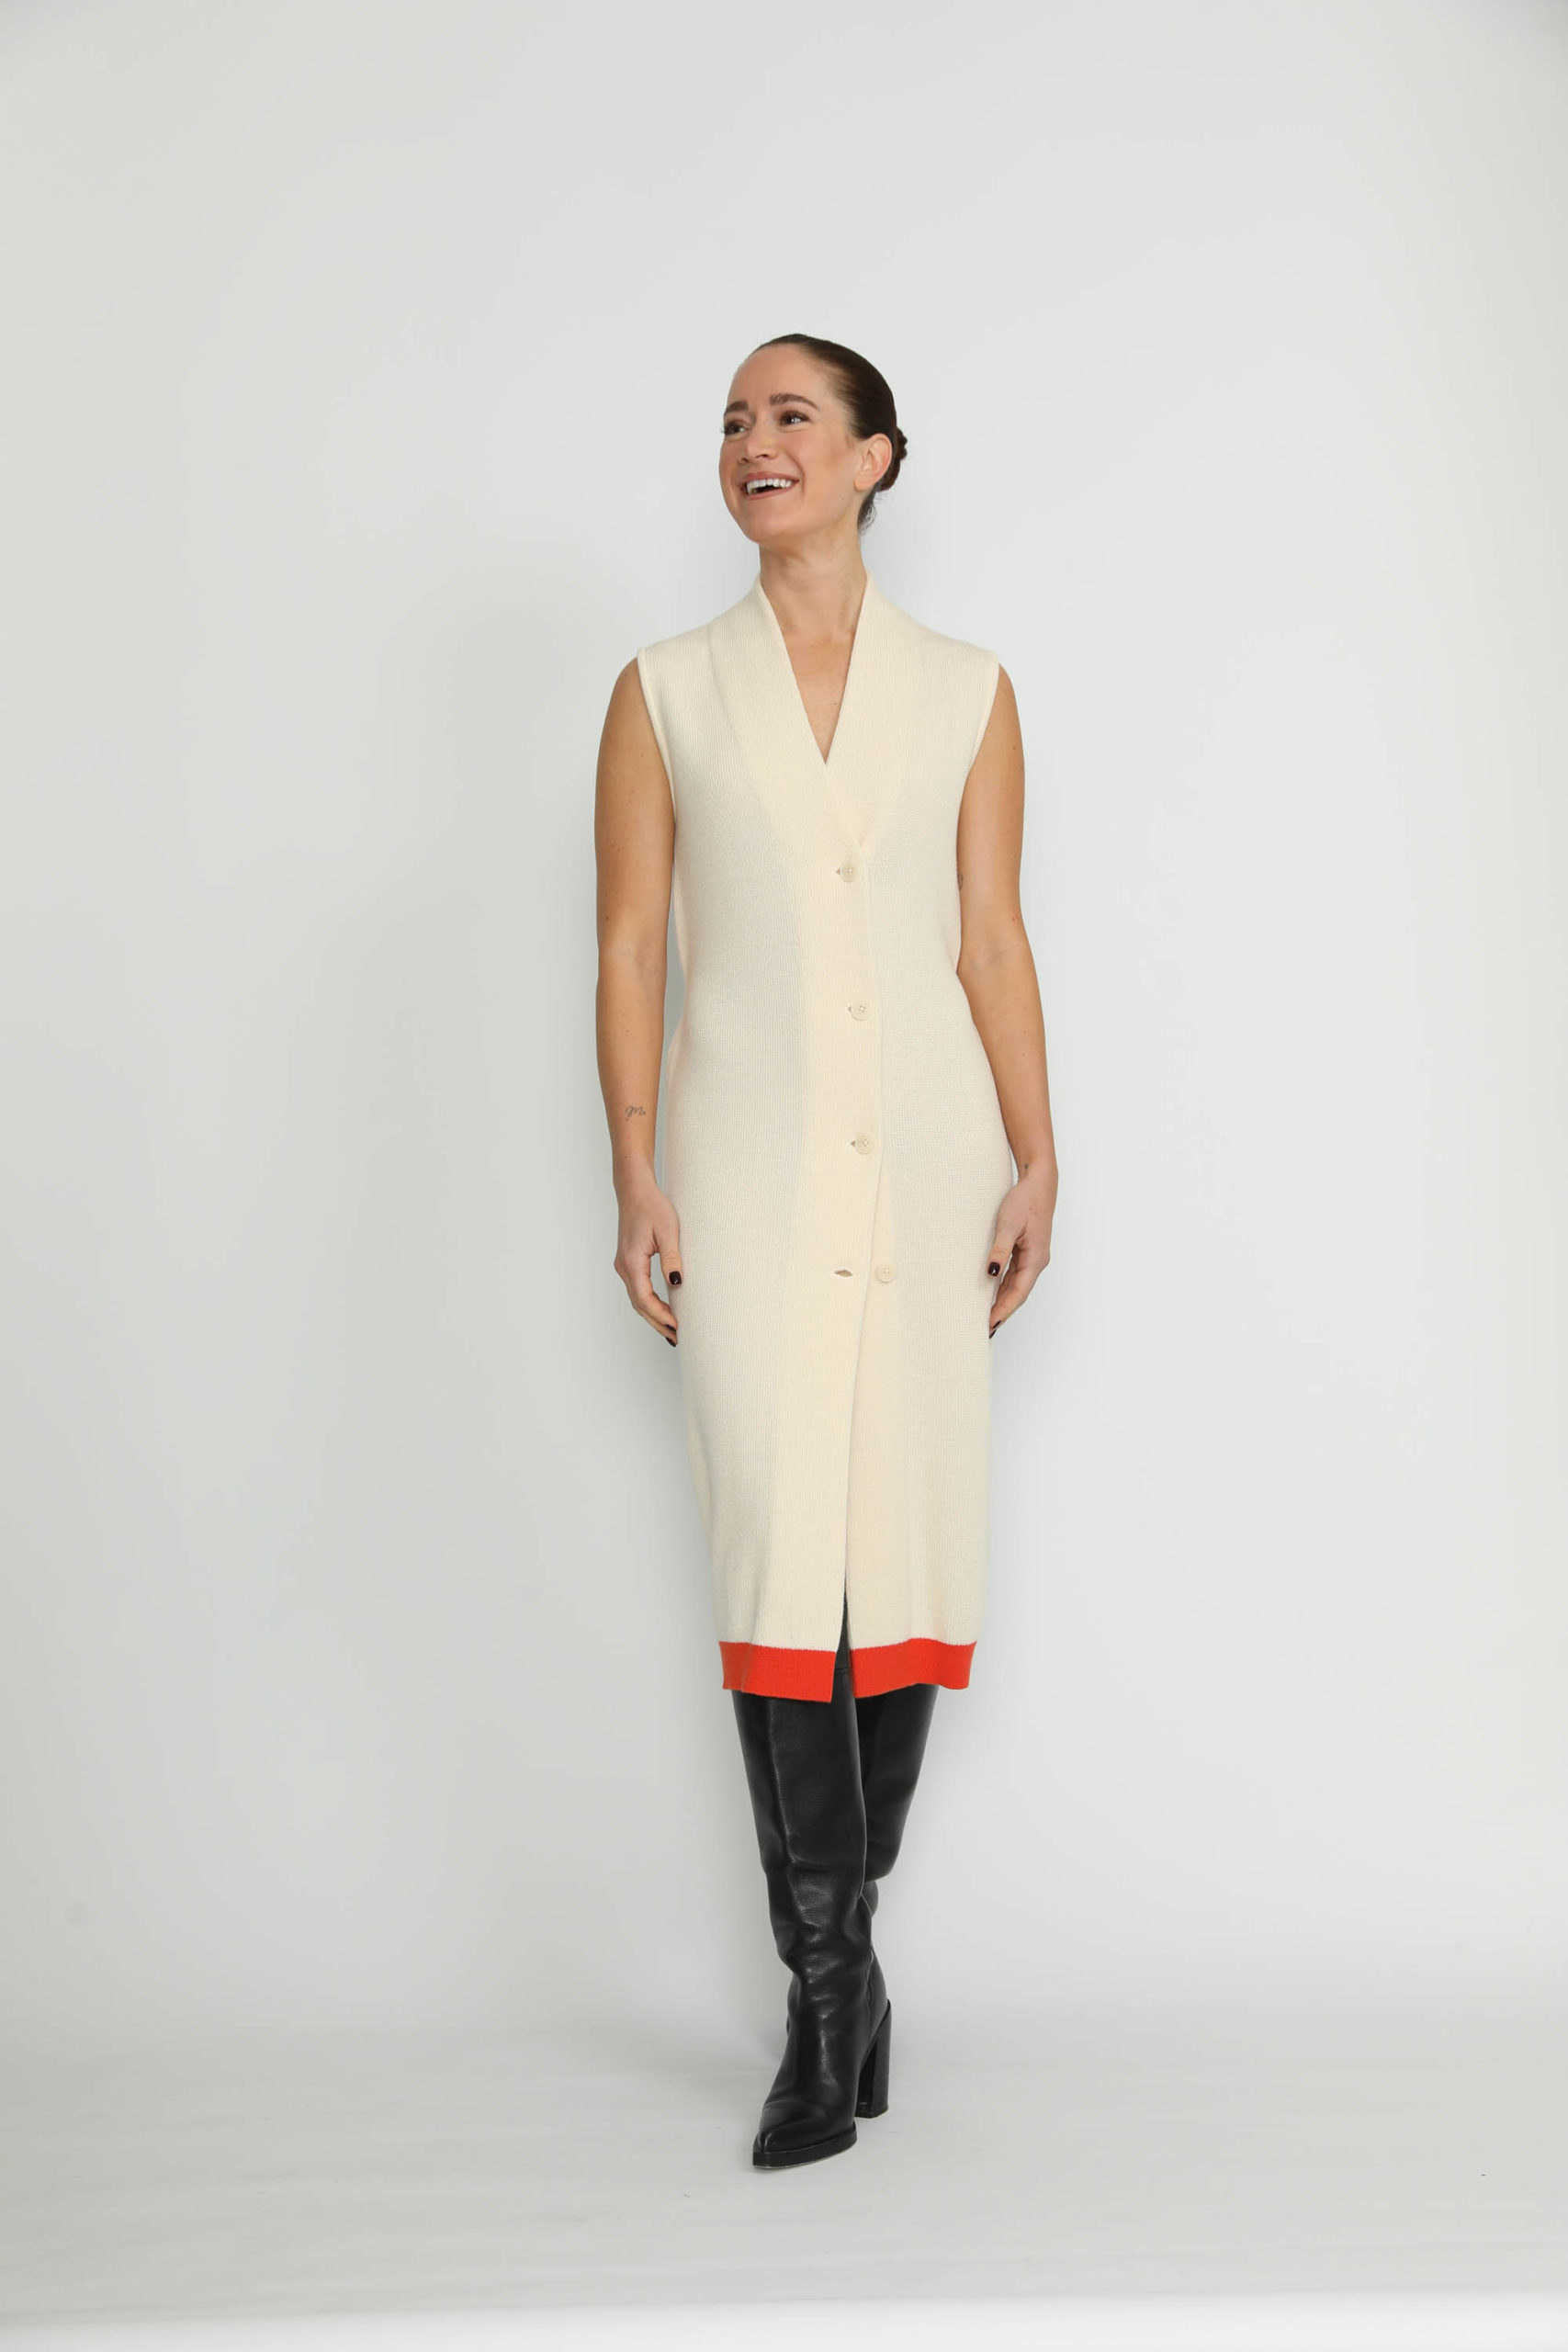 Arlesheim Dress – Arlesheim White/Orange Knit Dress